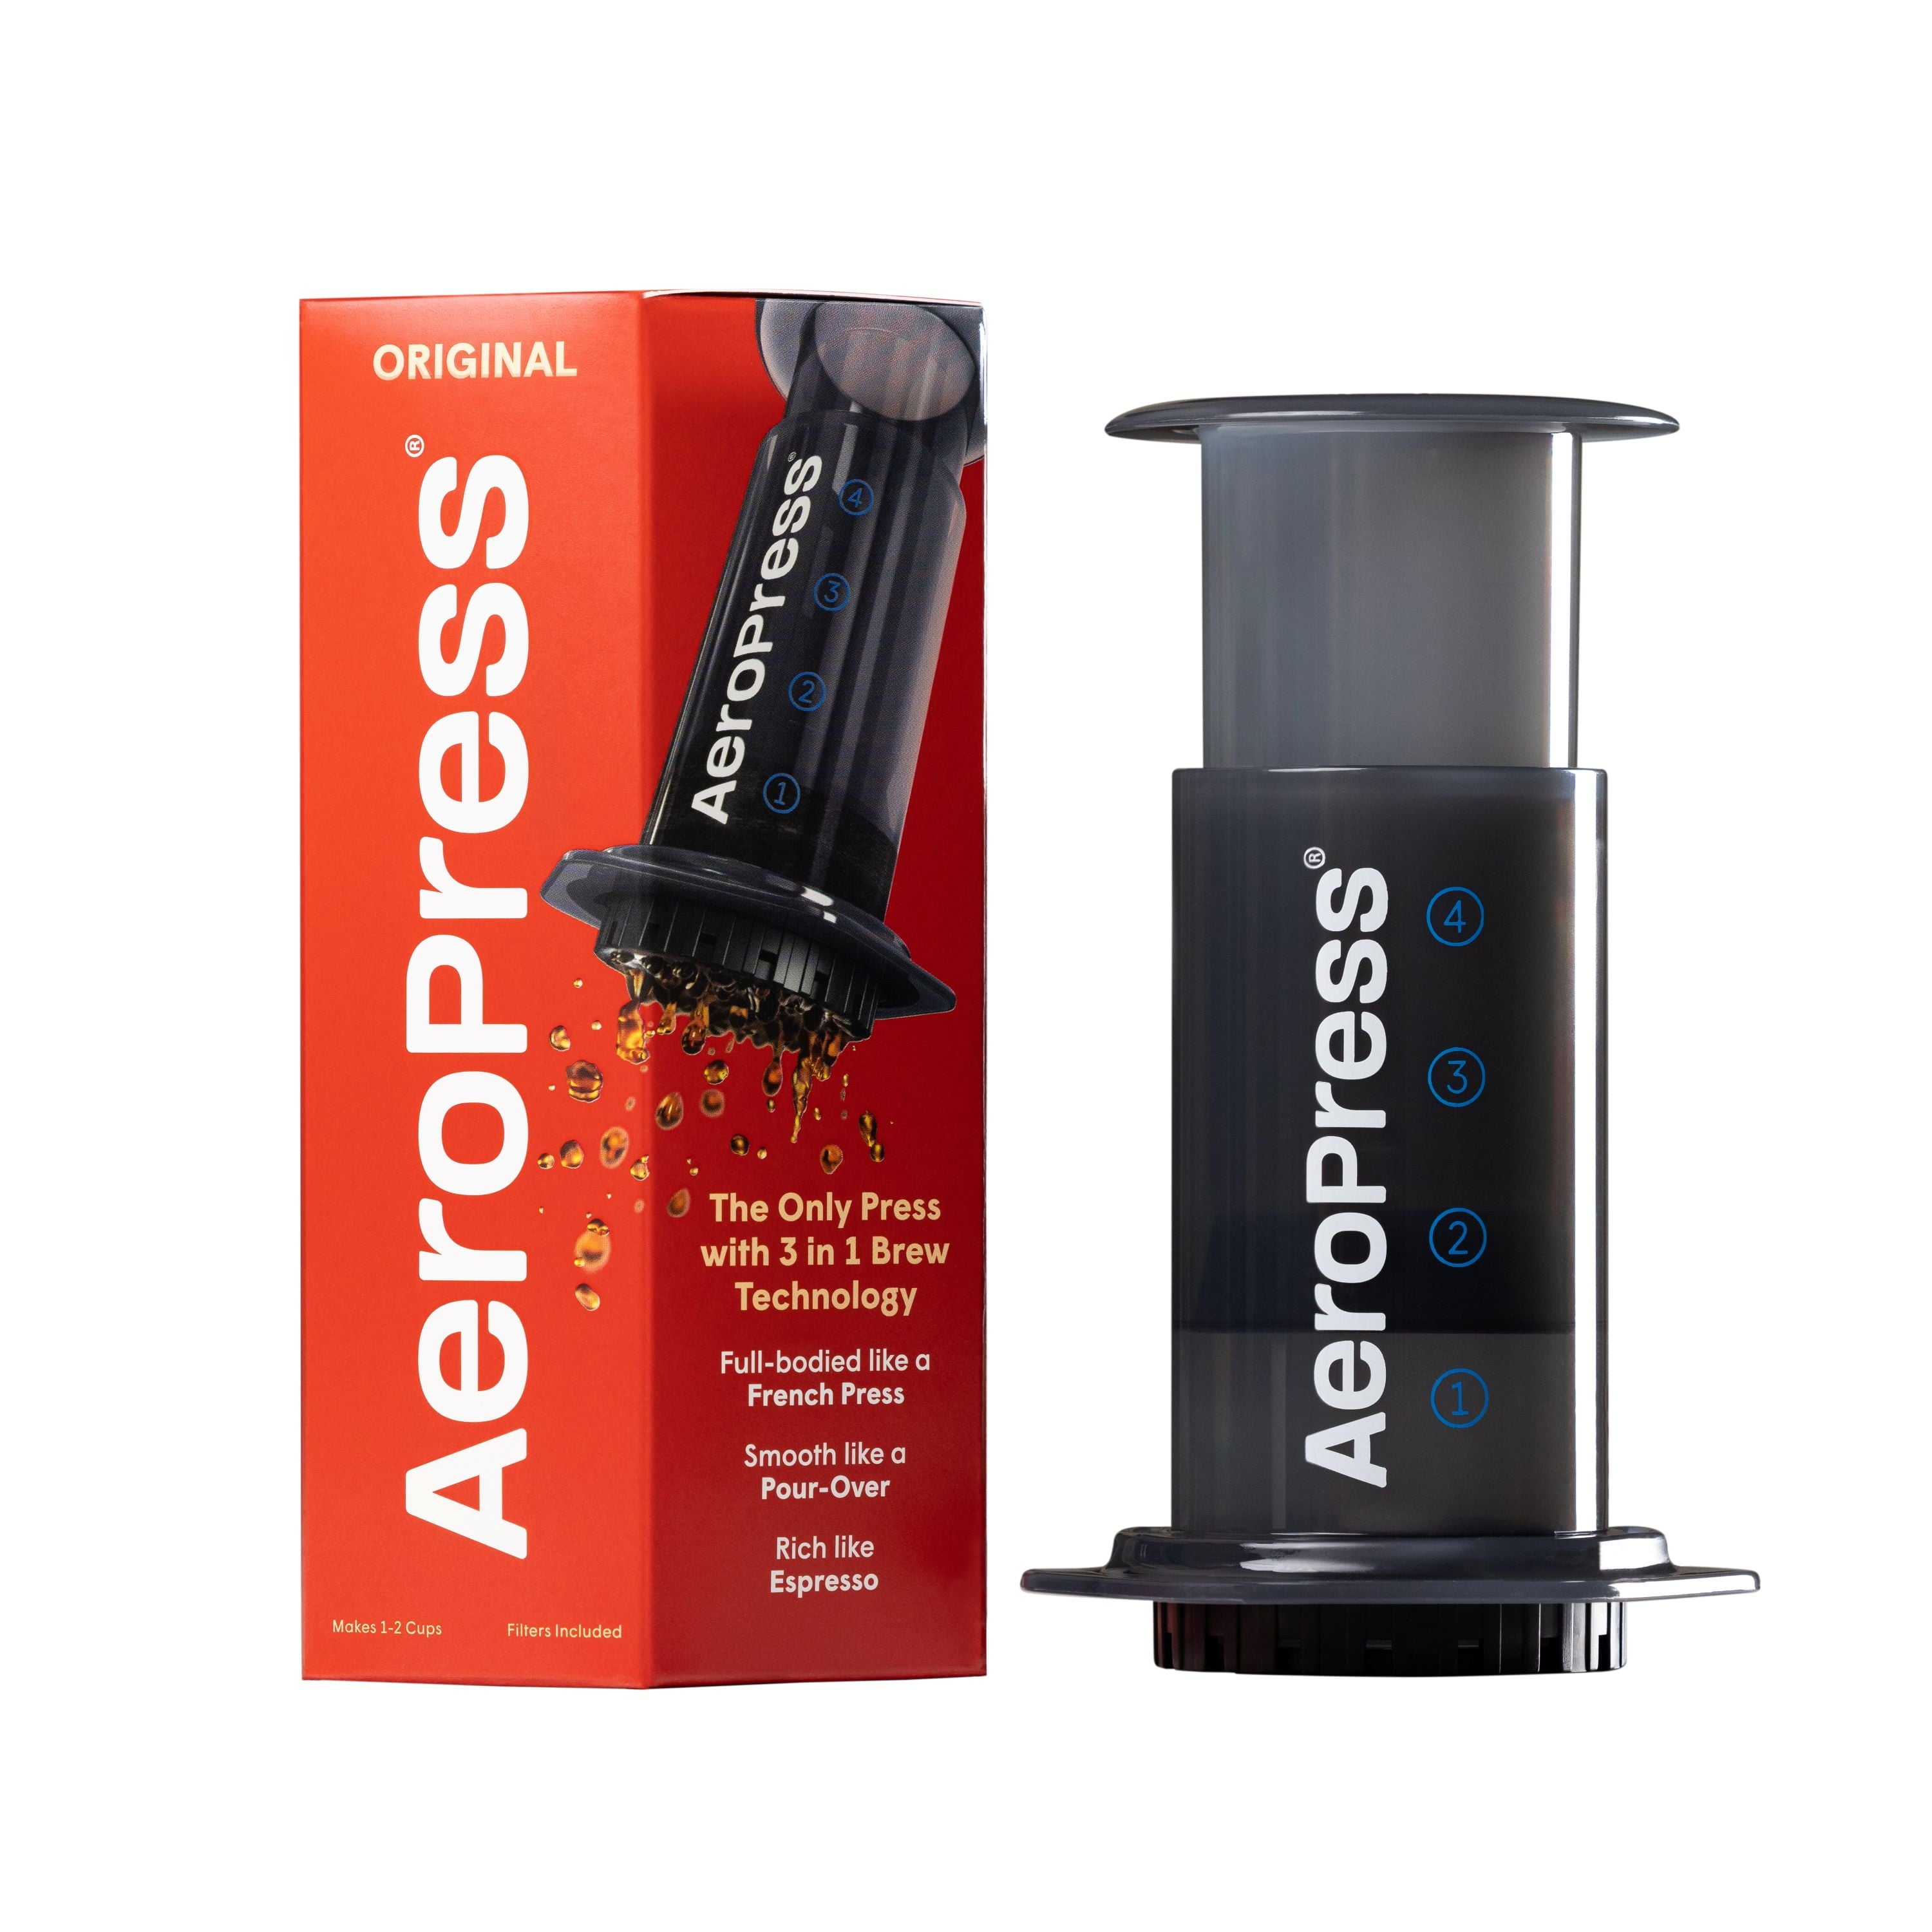 AeroPress Coffee Maker Original